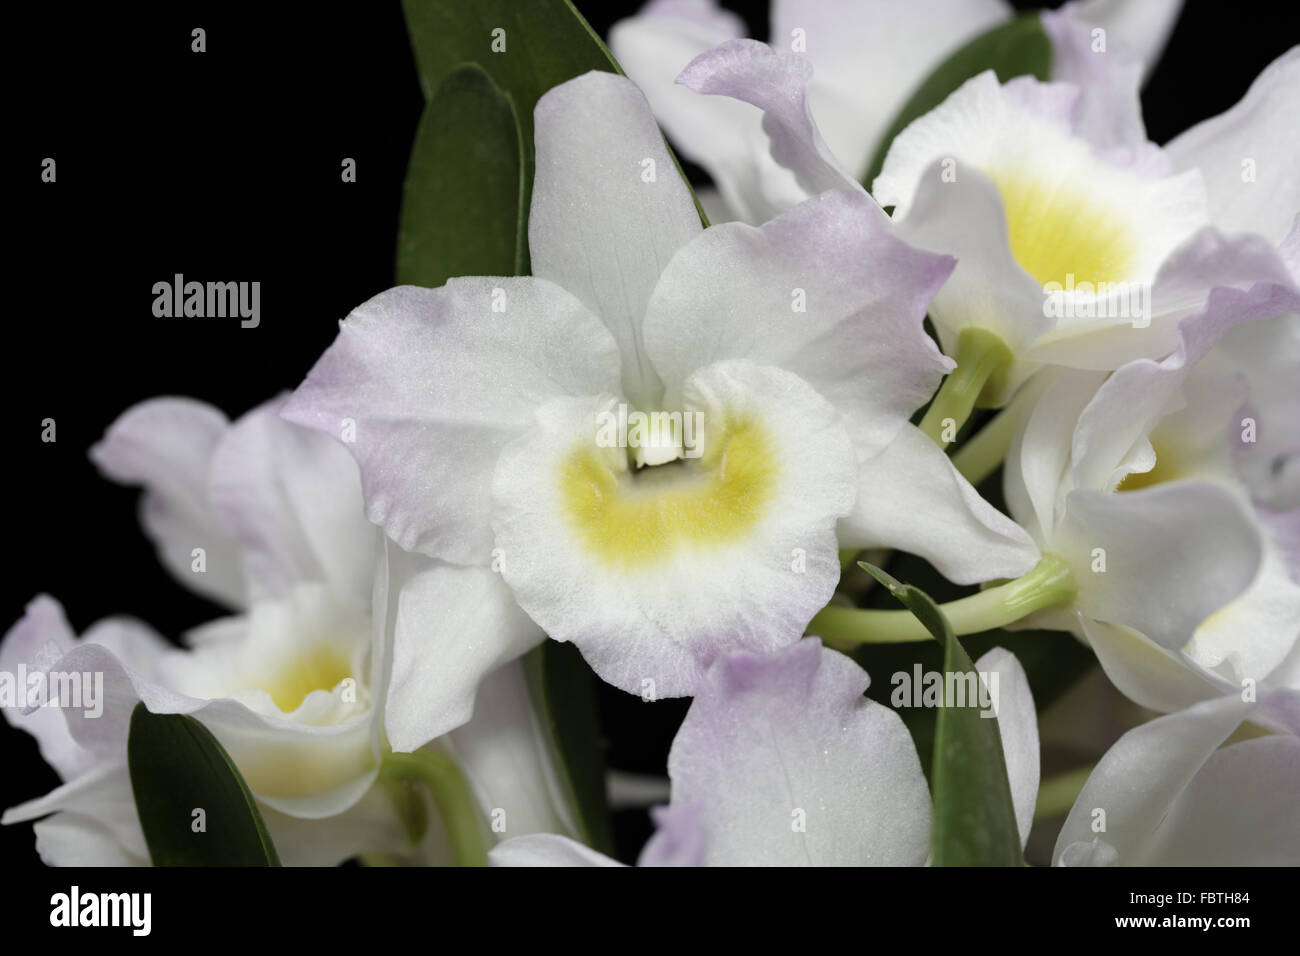 Dendrobium nobile orchid flowers Stock Photo